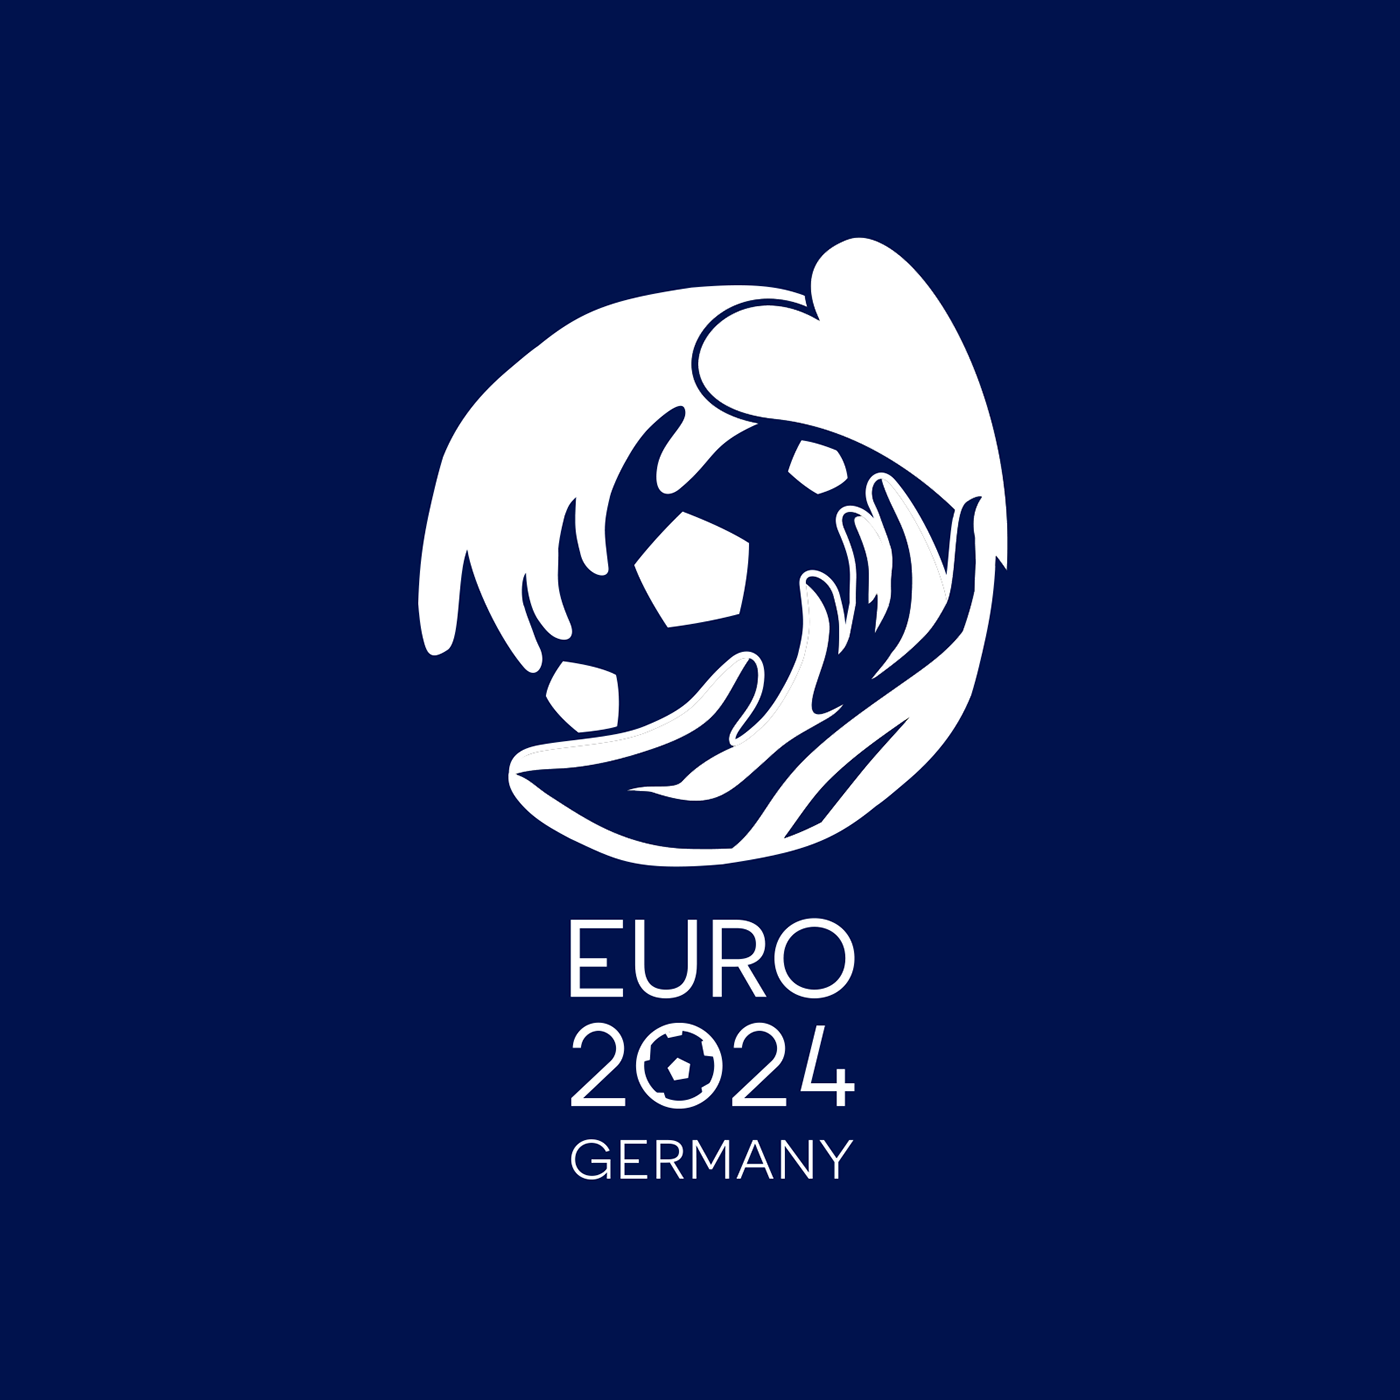 EURO 2024 Germany Logo Proposal on Behance